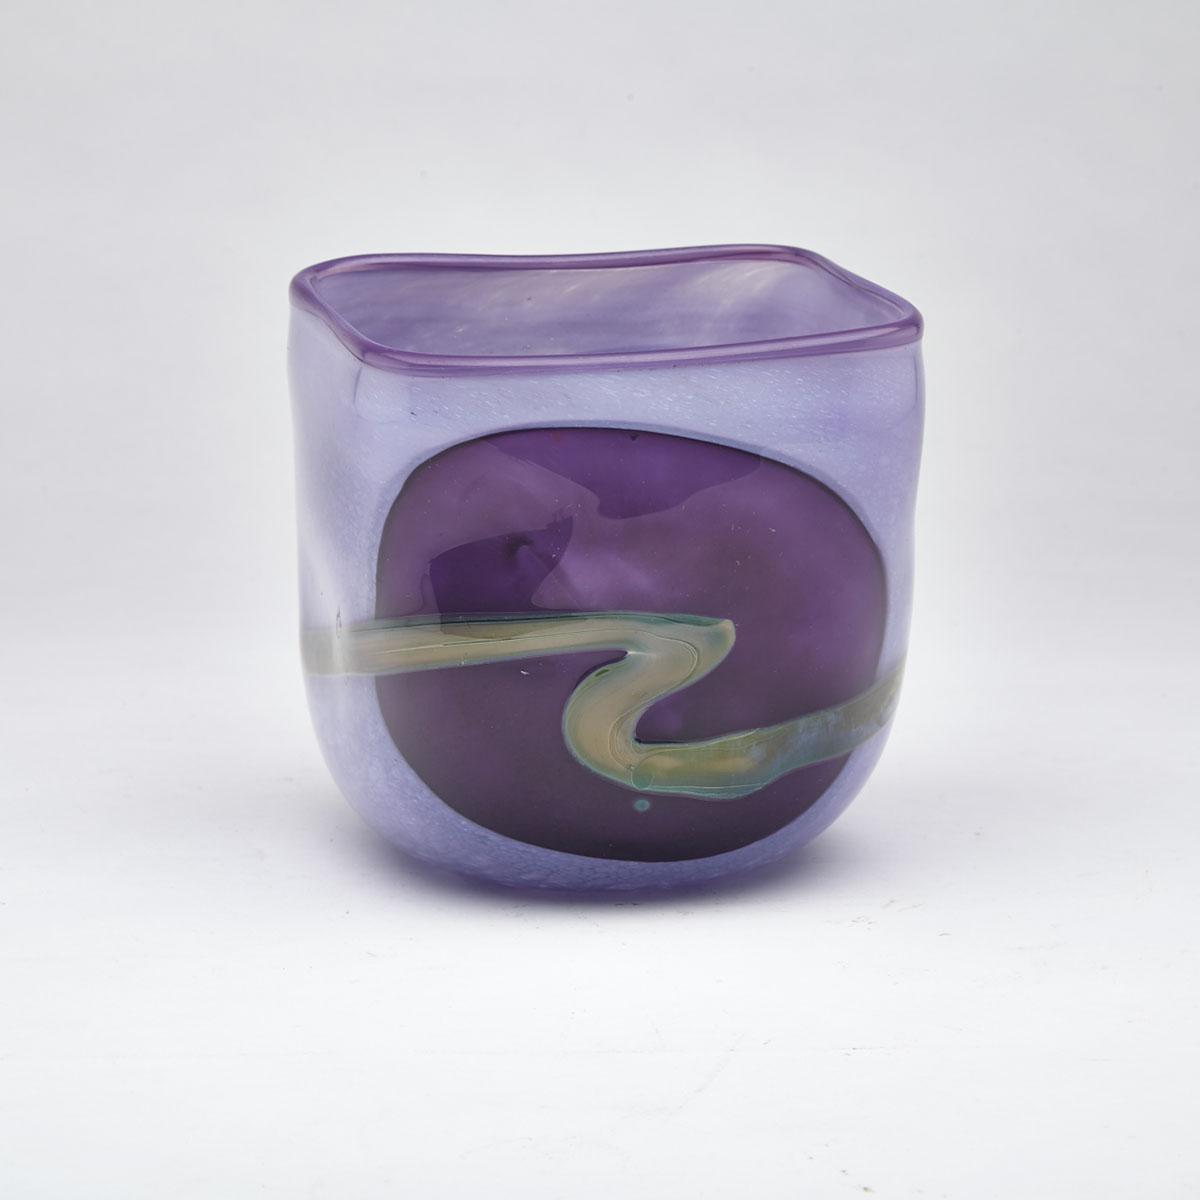 David New-Small (American-Canadian, b.1945), Glass Vase, 1992